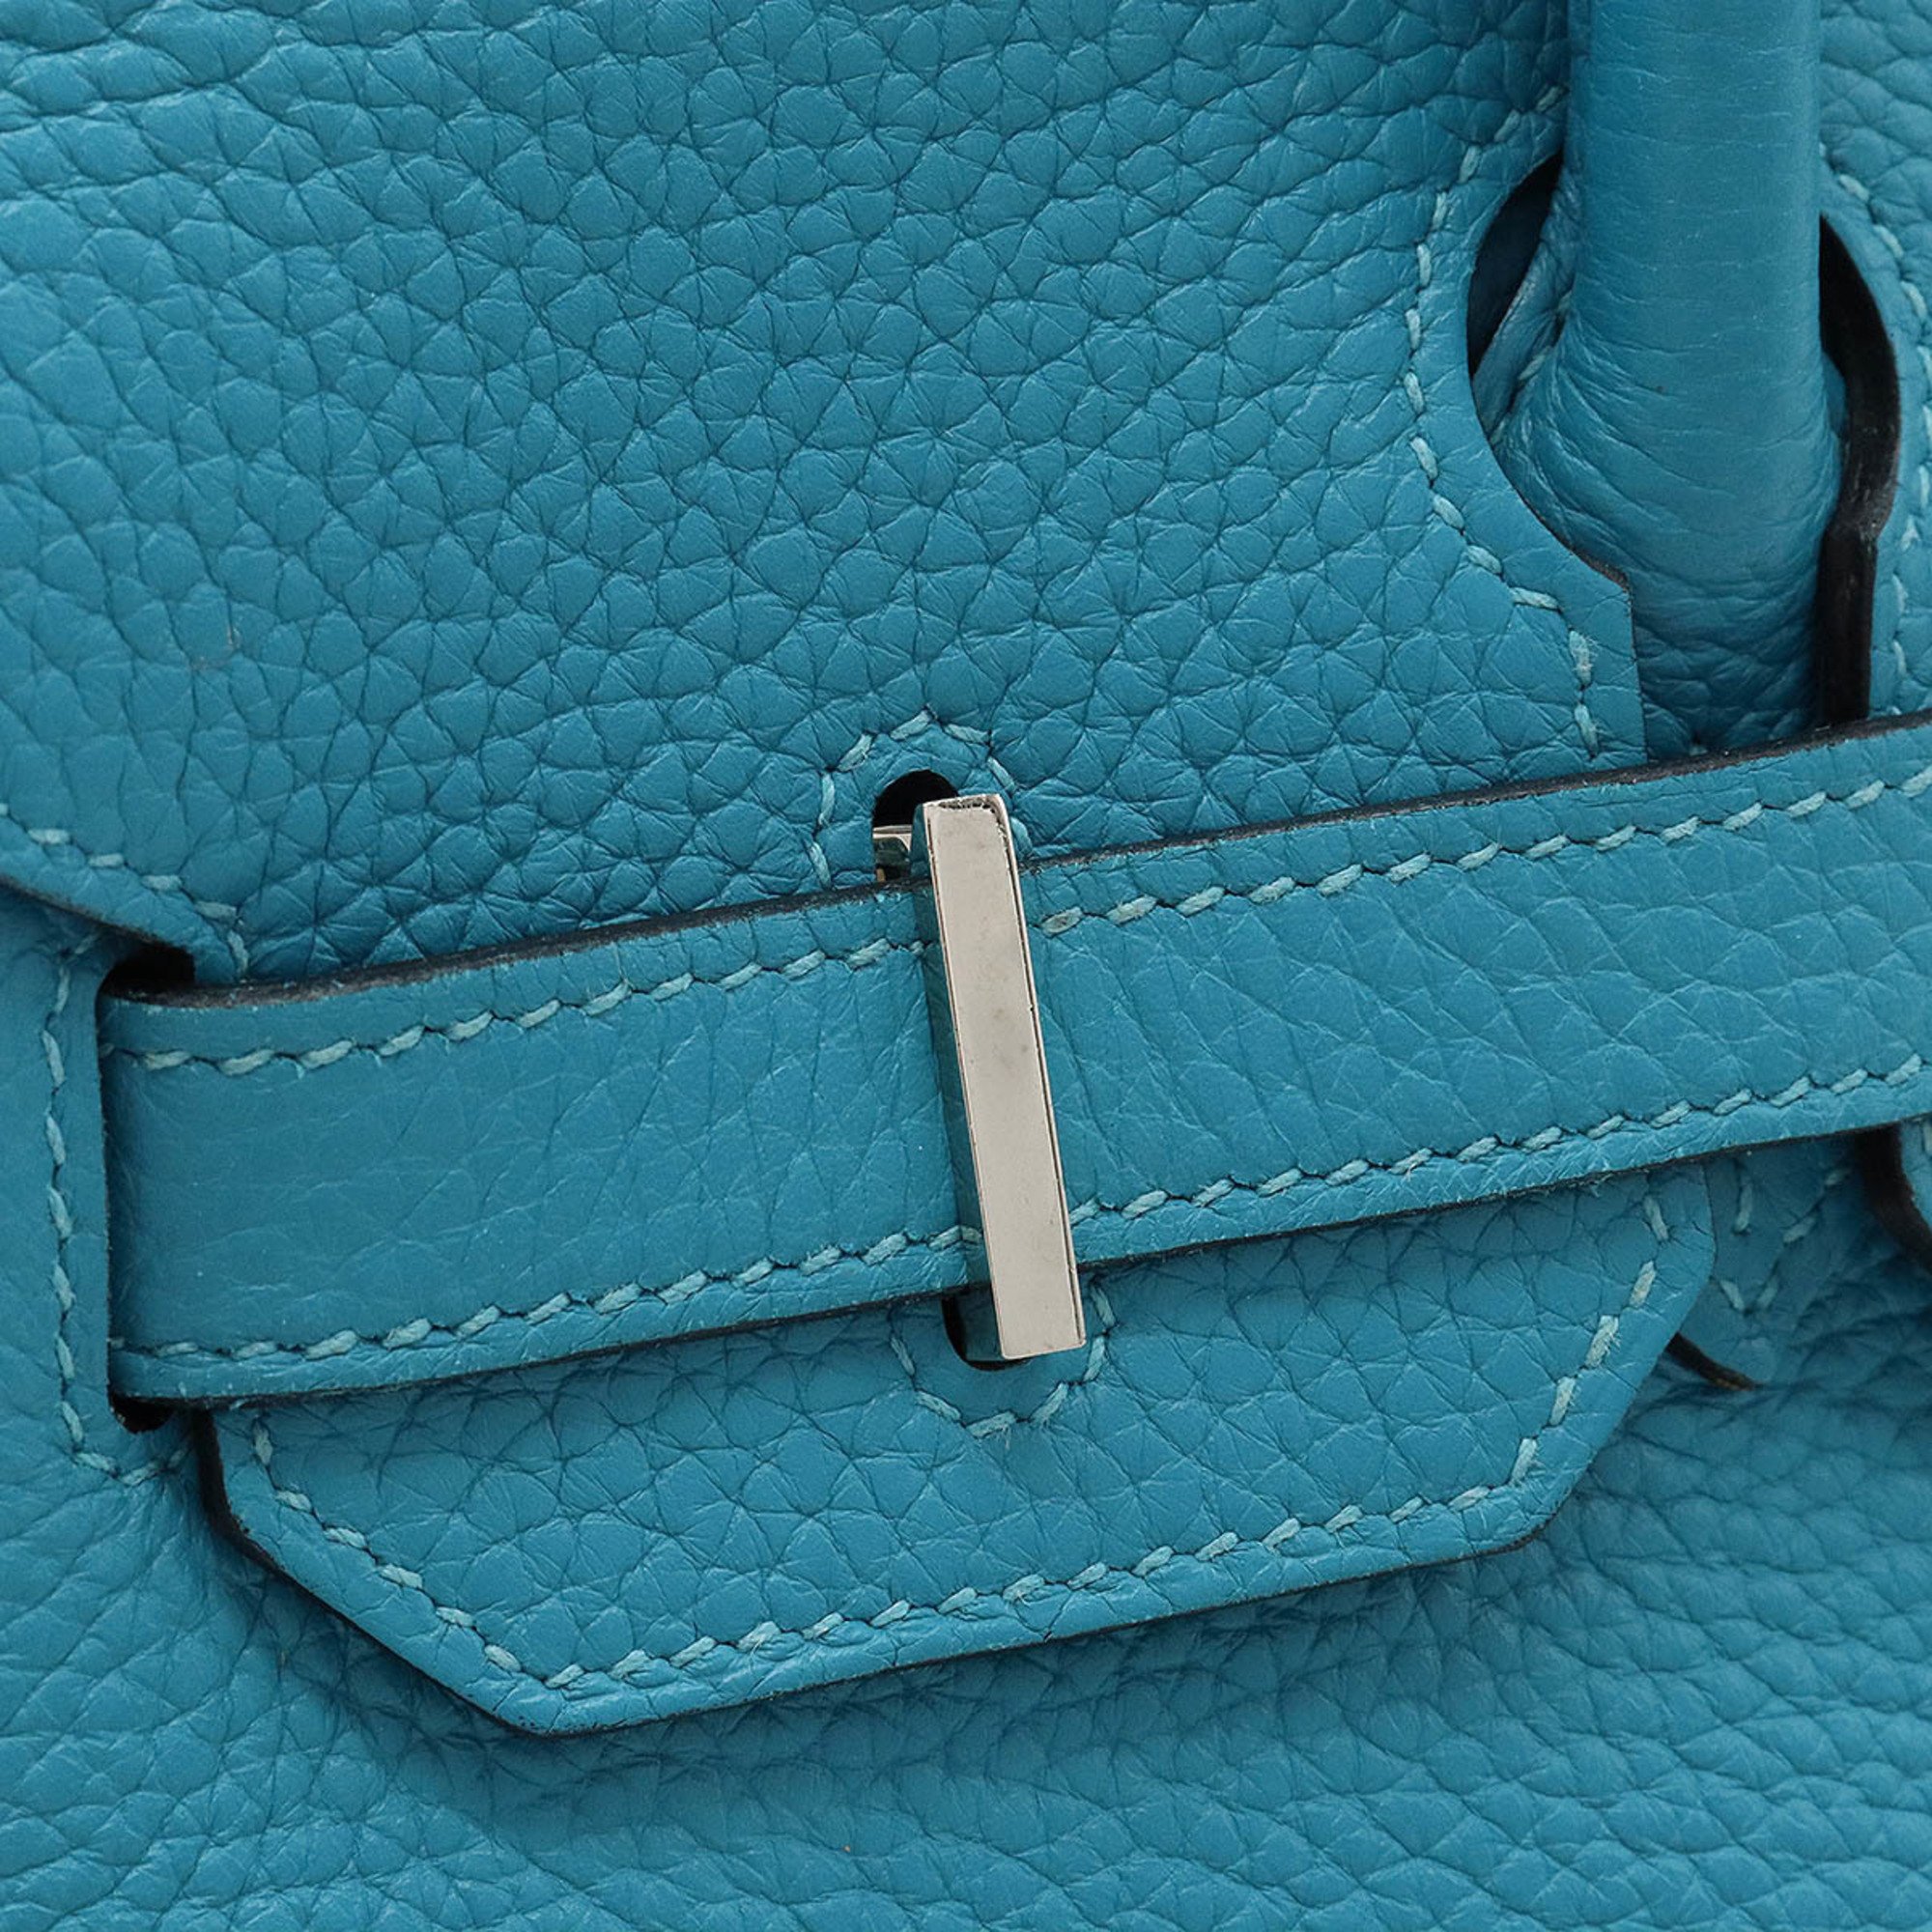 HERMES Birkin 30 Handbag Taurillon Leather Turquoise Blue Y Stamp